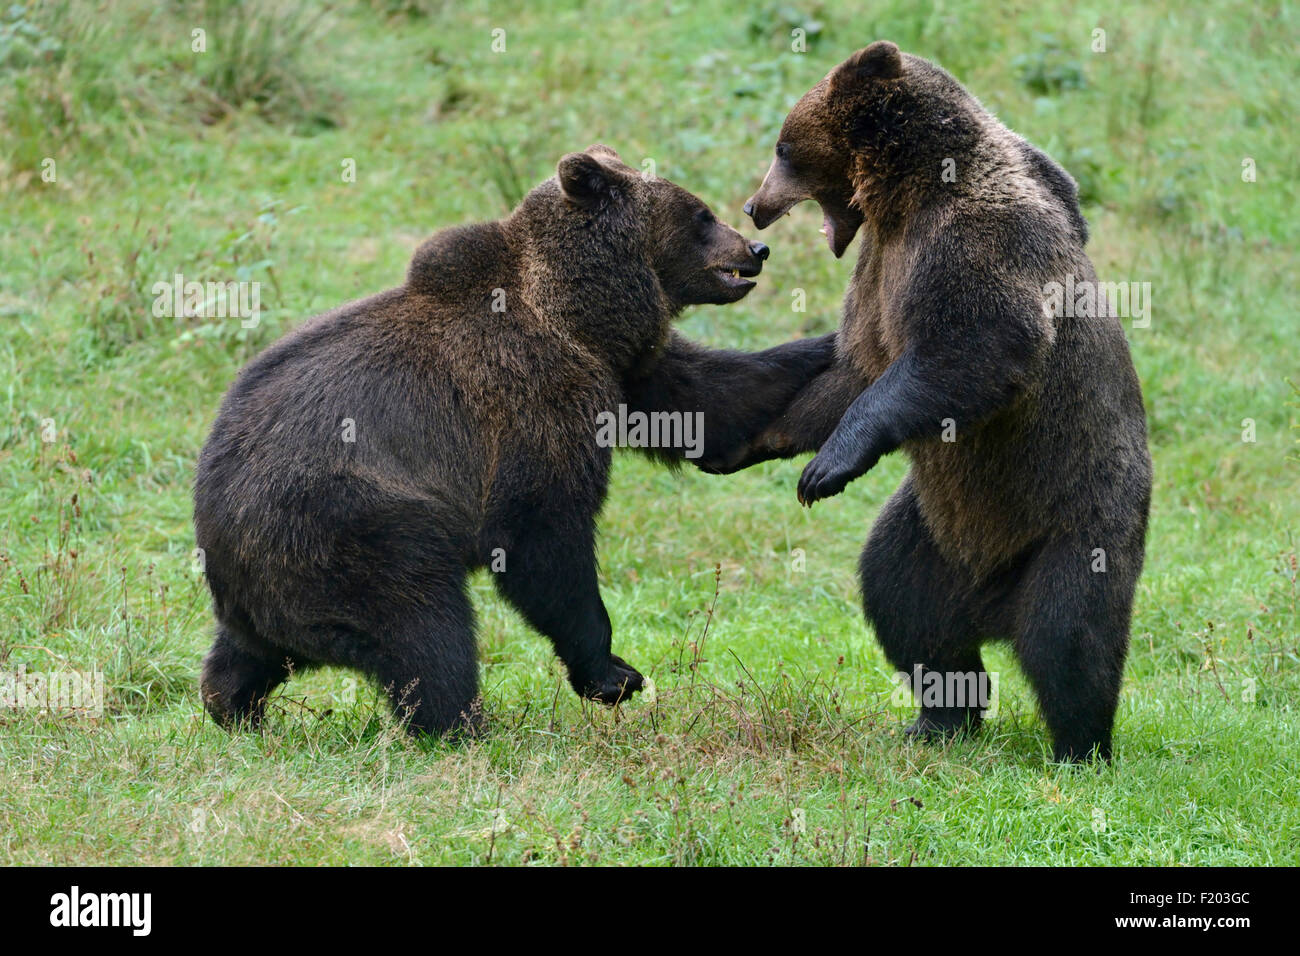 Ursus arctos / Eurasian orso bruno / orso bruno / Europaeische Braunbaeren gioca con l'altra. Foto Stock